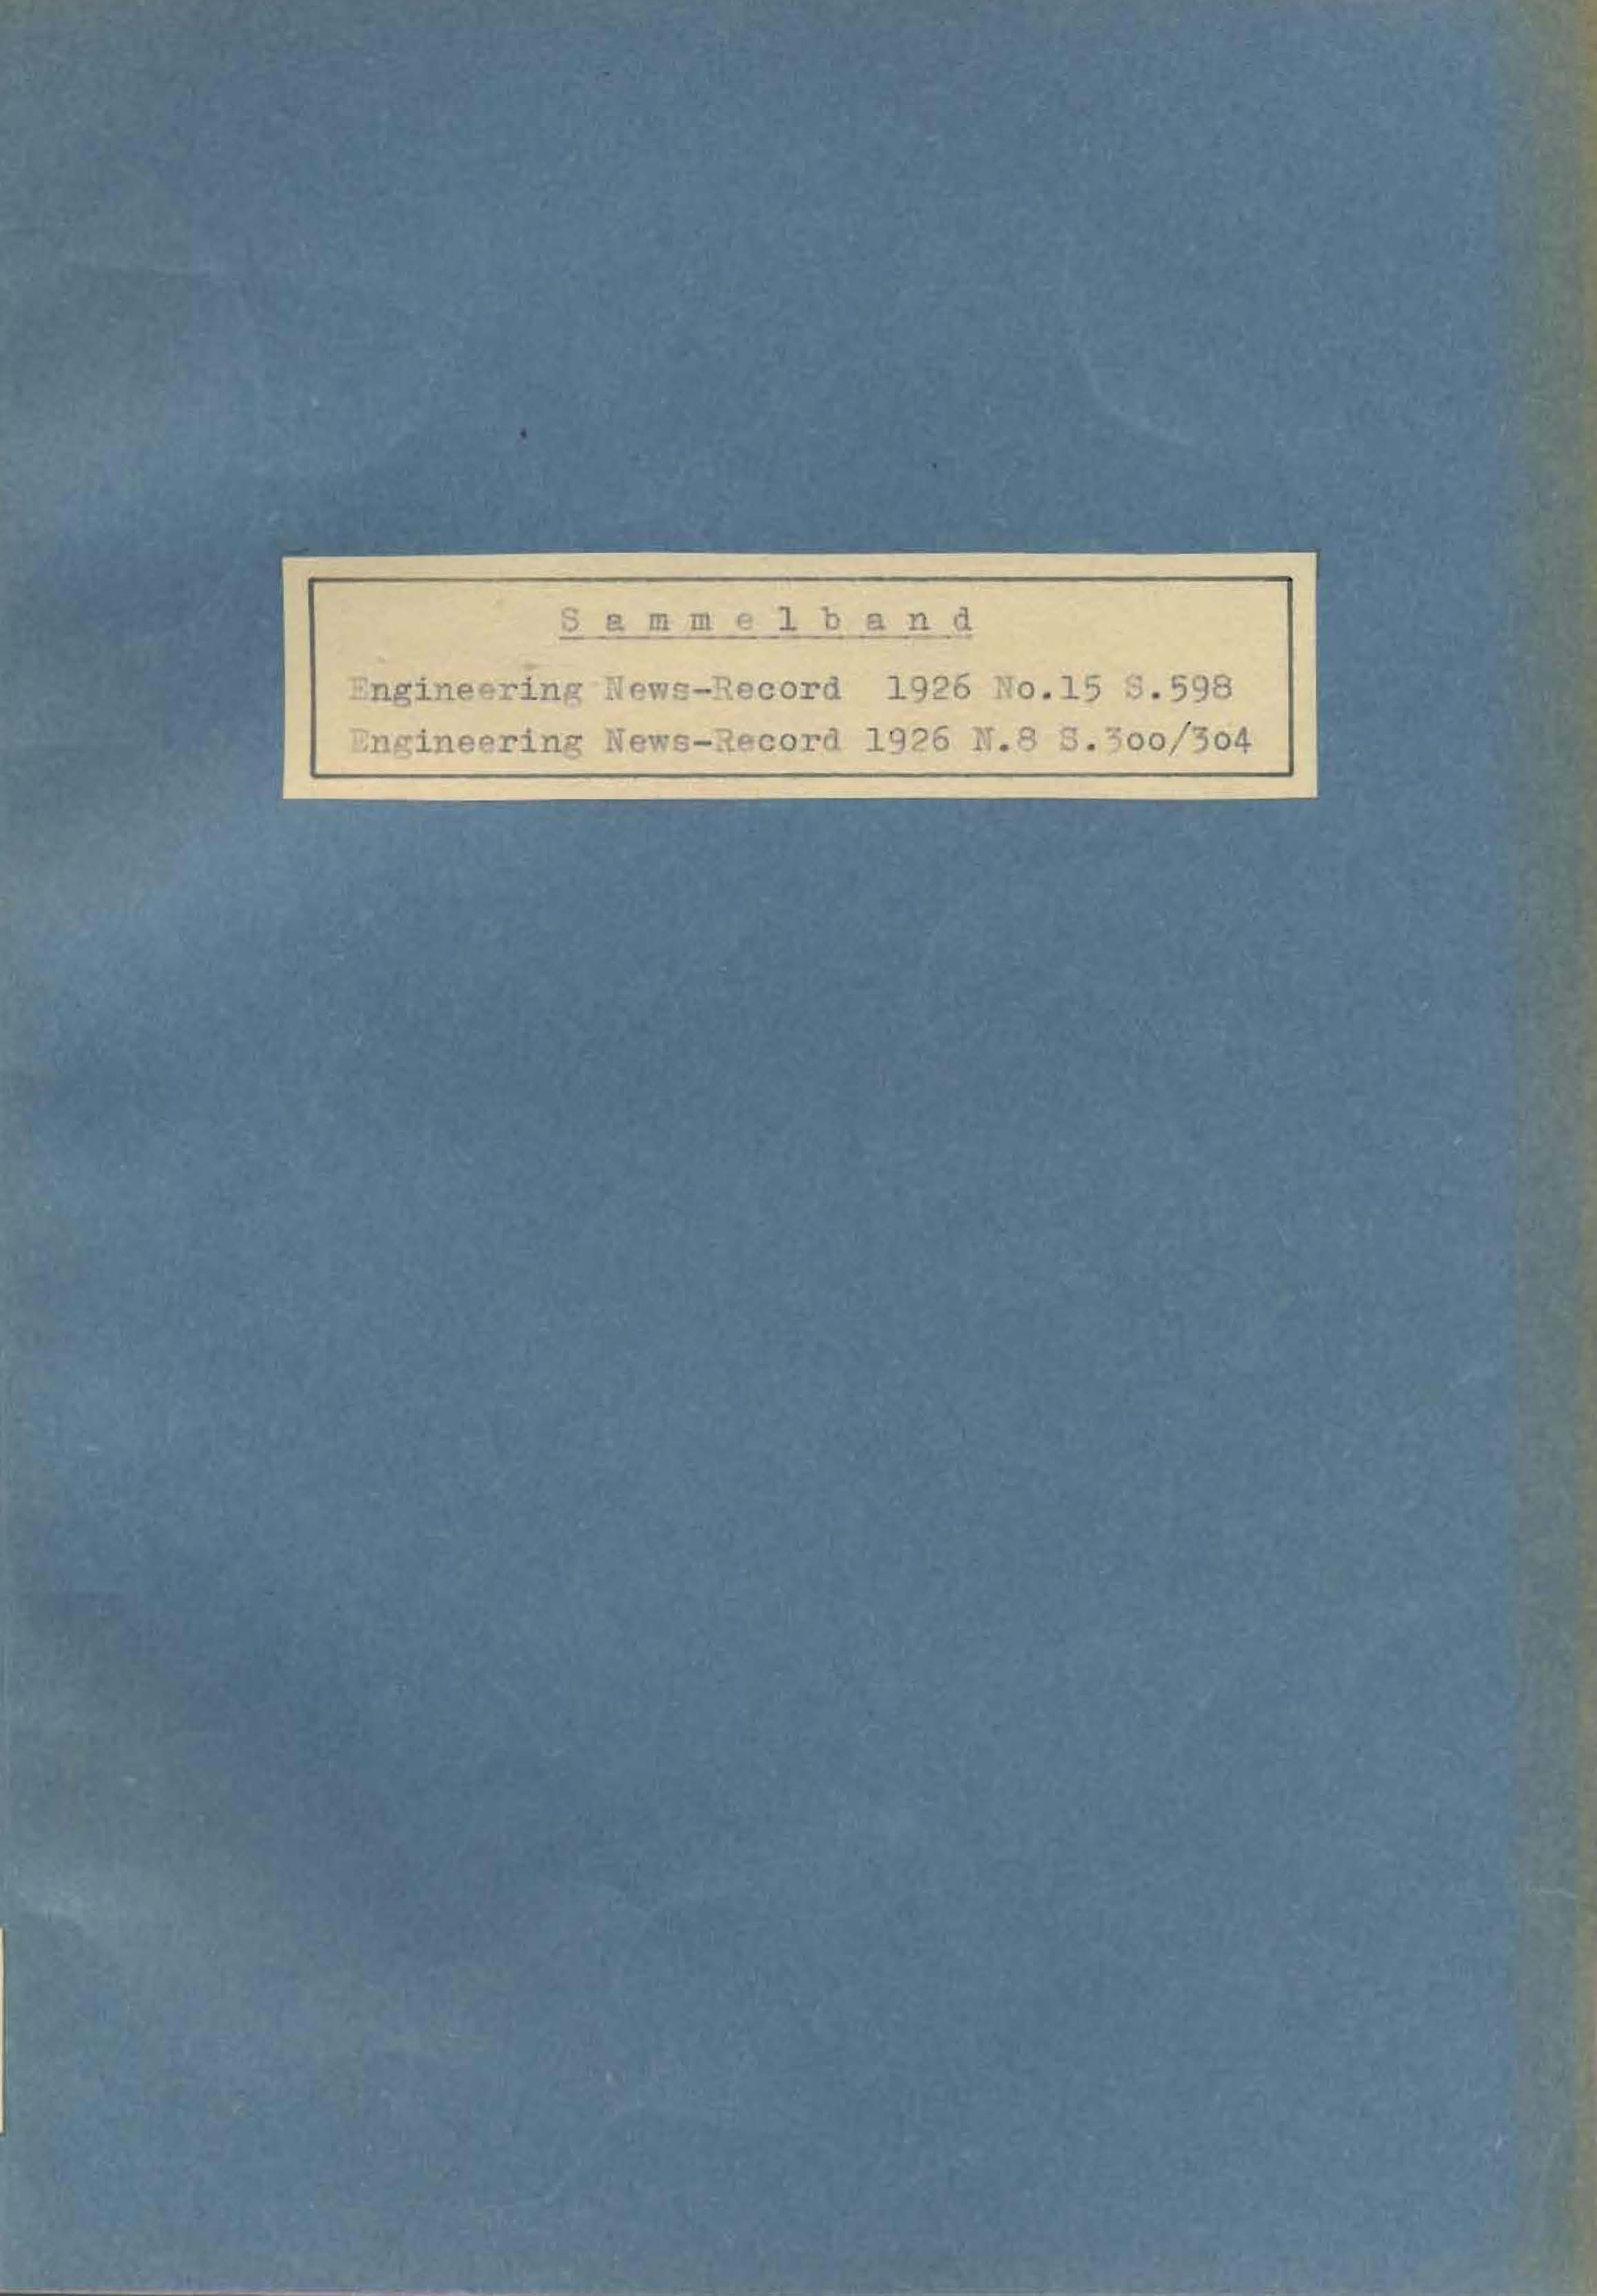 Engineering News - Record 1926